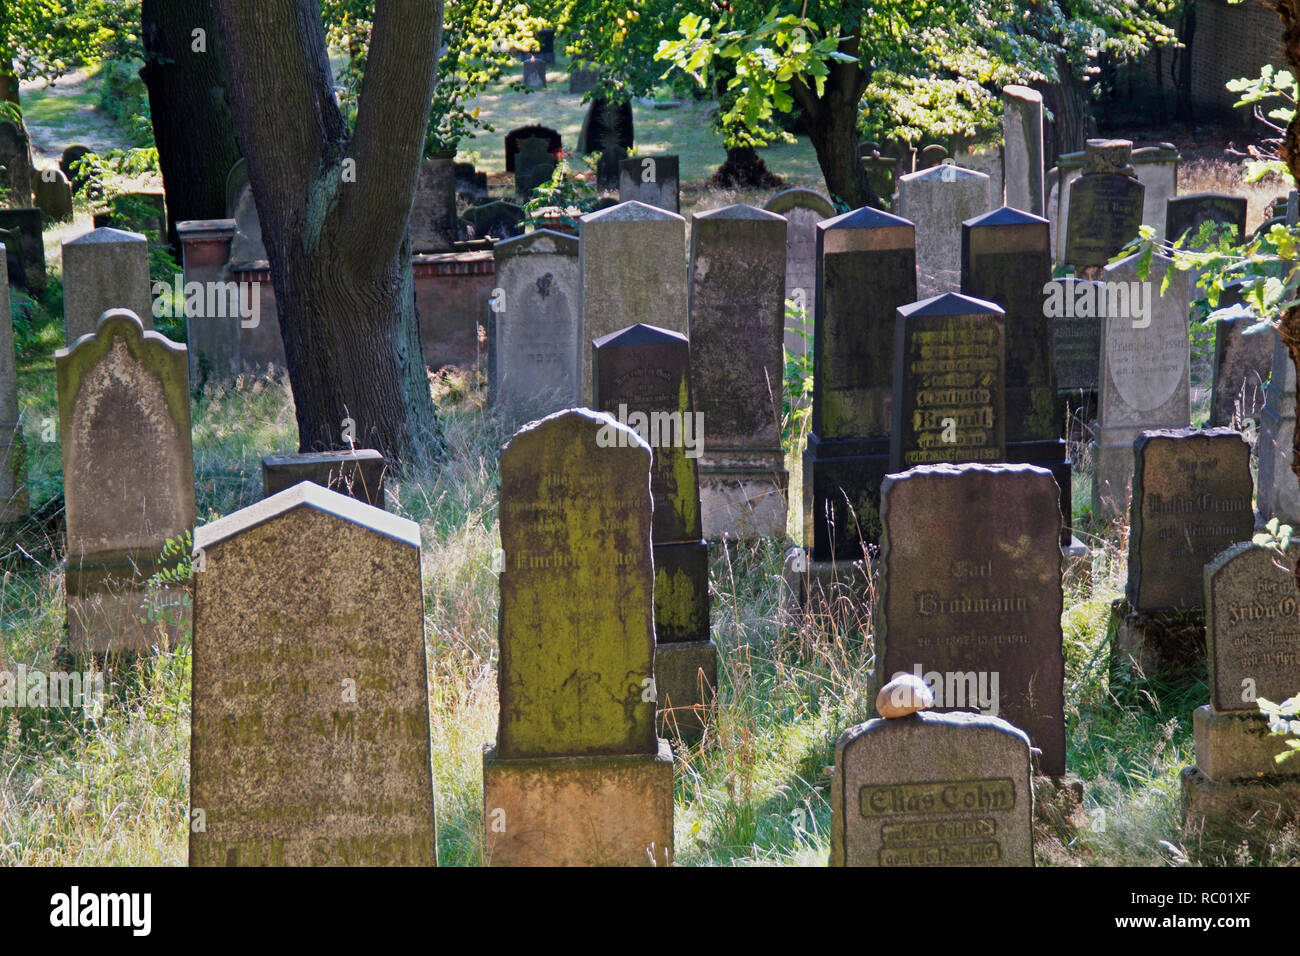 Jüdischer Friedhof, Potsdam, jewish cemetra Stock Photo